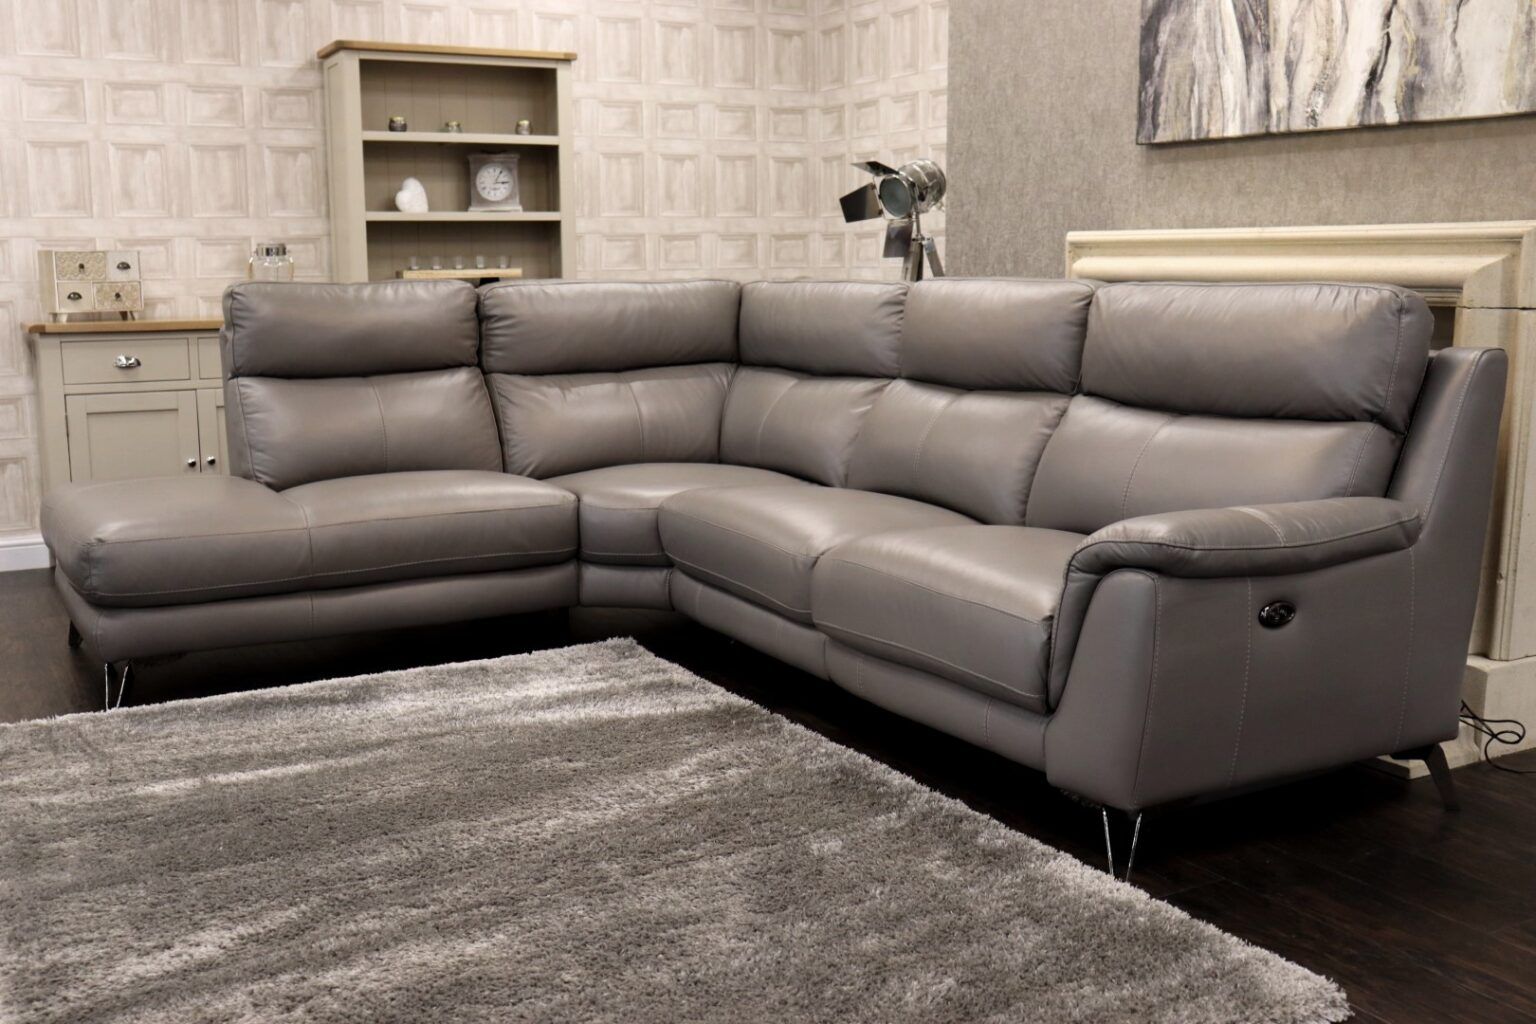 New Incanto Contempo (Famous Designer Brand) Premium Pure Within Contempo Power Reclining Sofas (View 3 of 15)